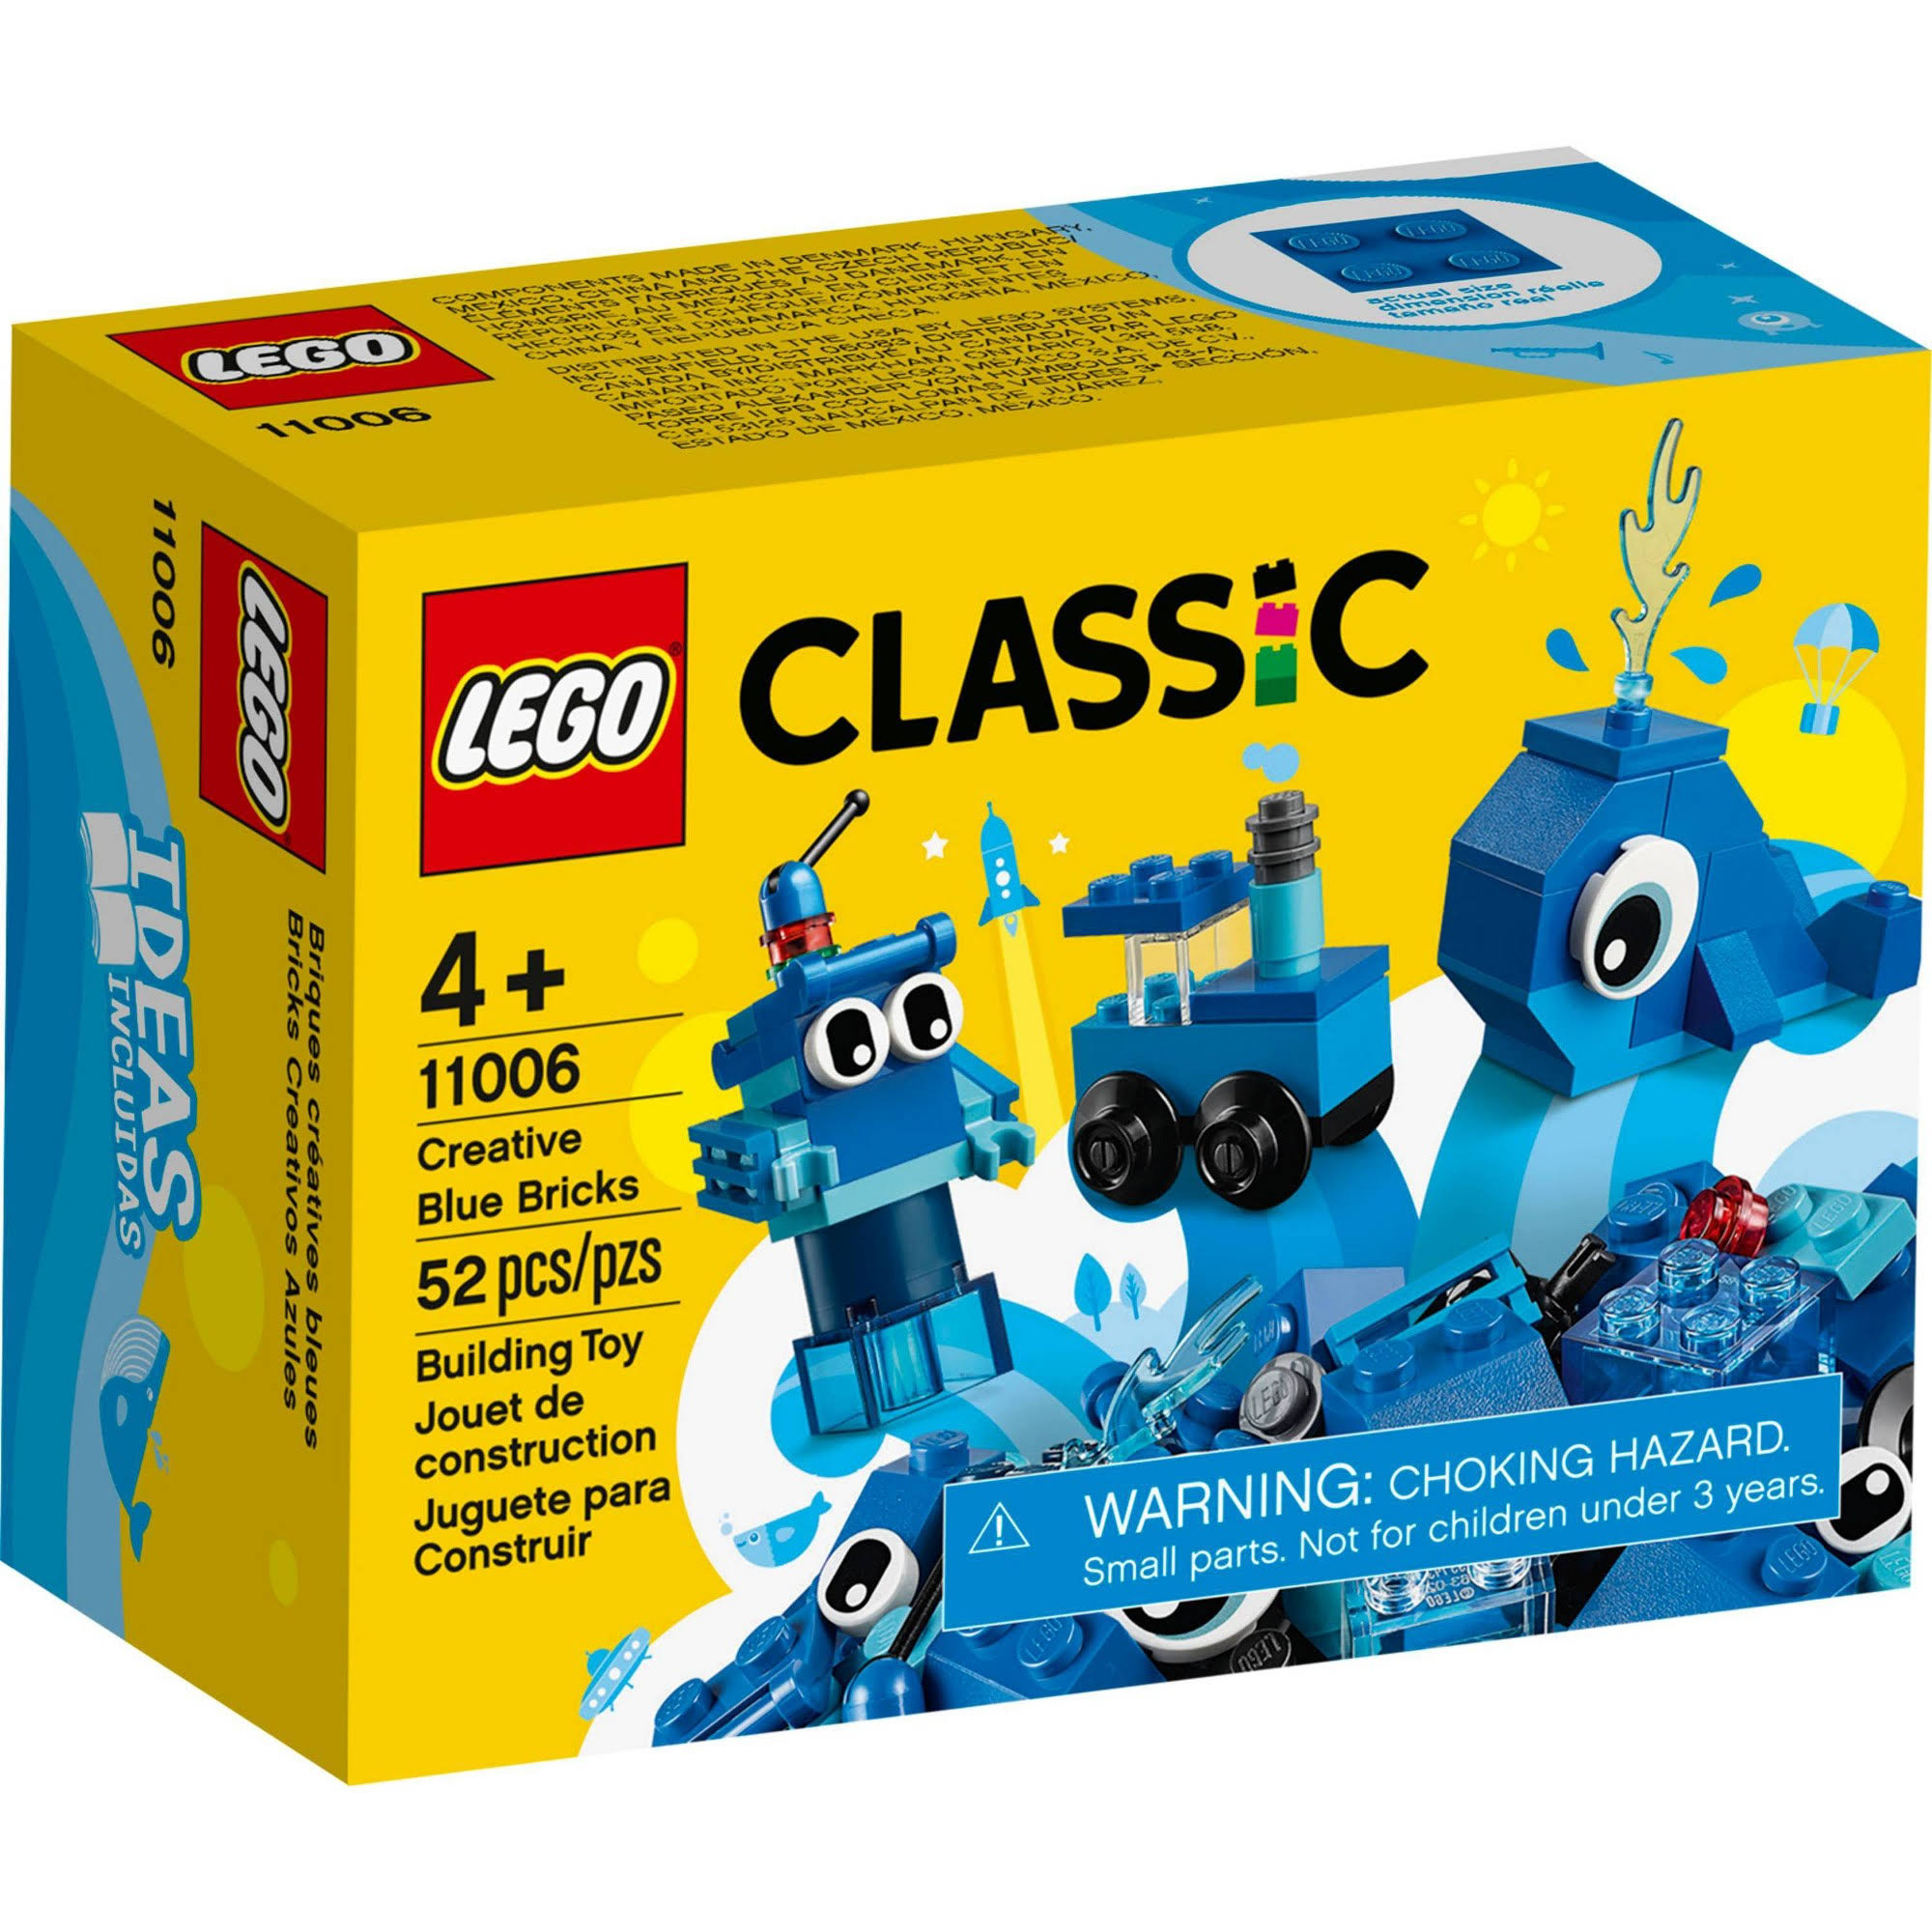 LEGO Classic Creative Blue Bricks 11006 Age 4